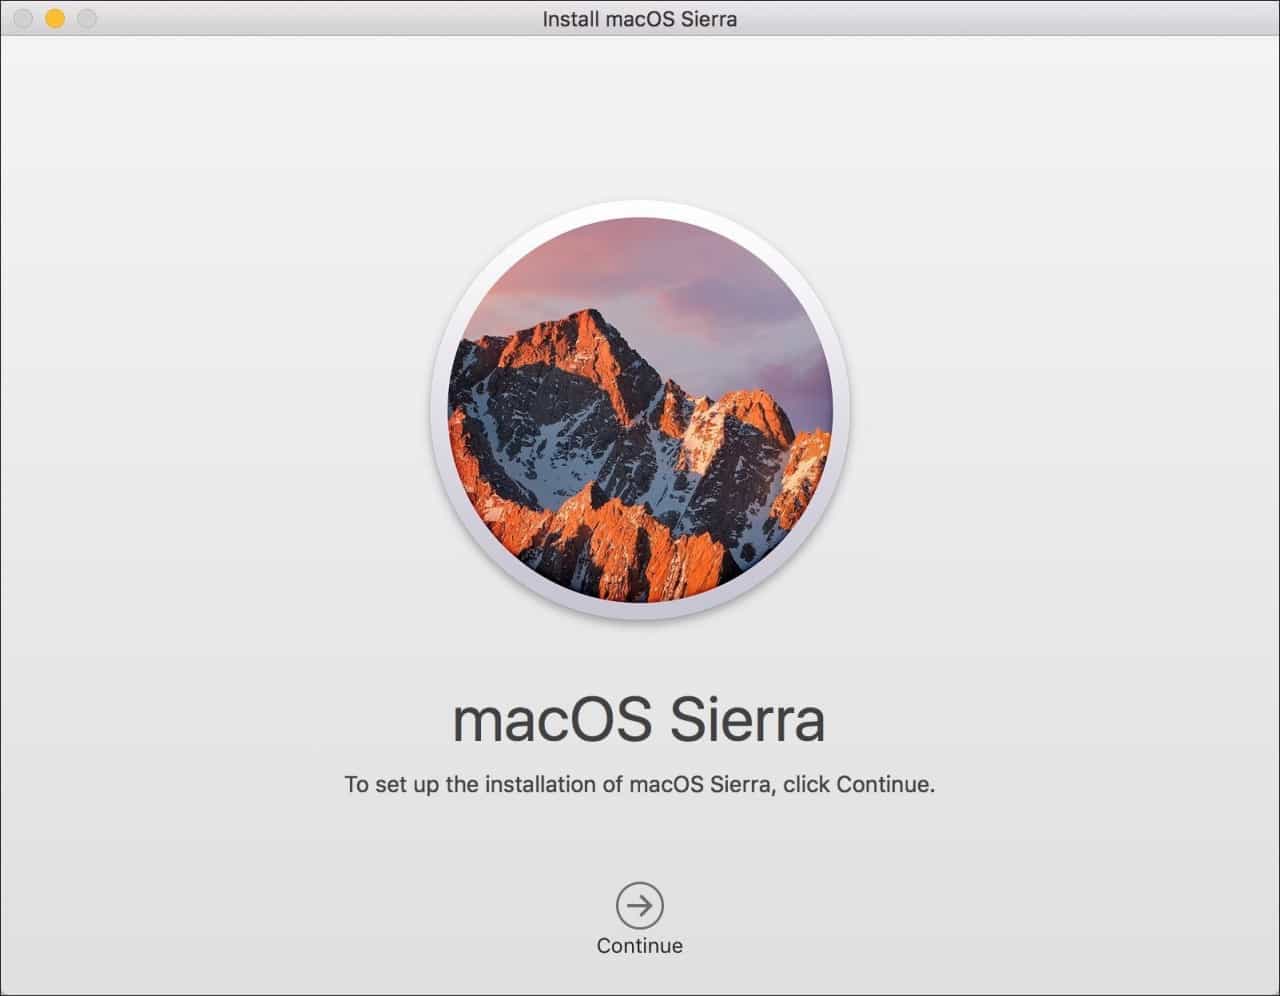 macos sierra installer app download